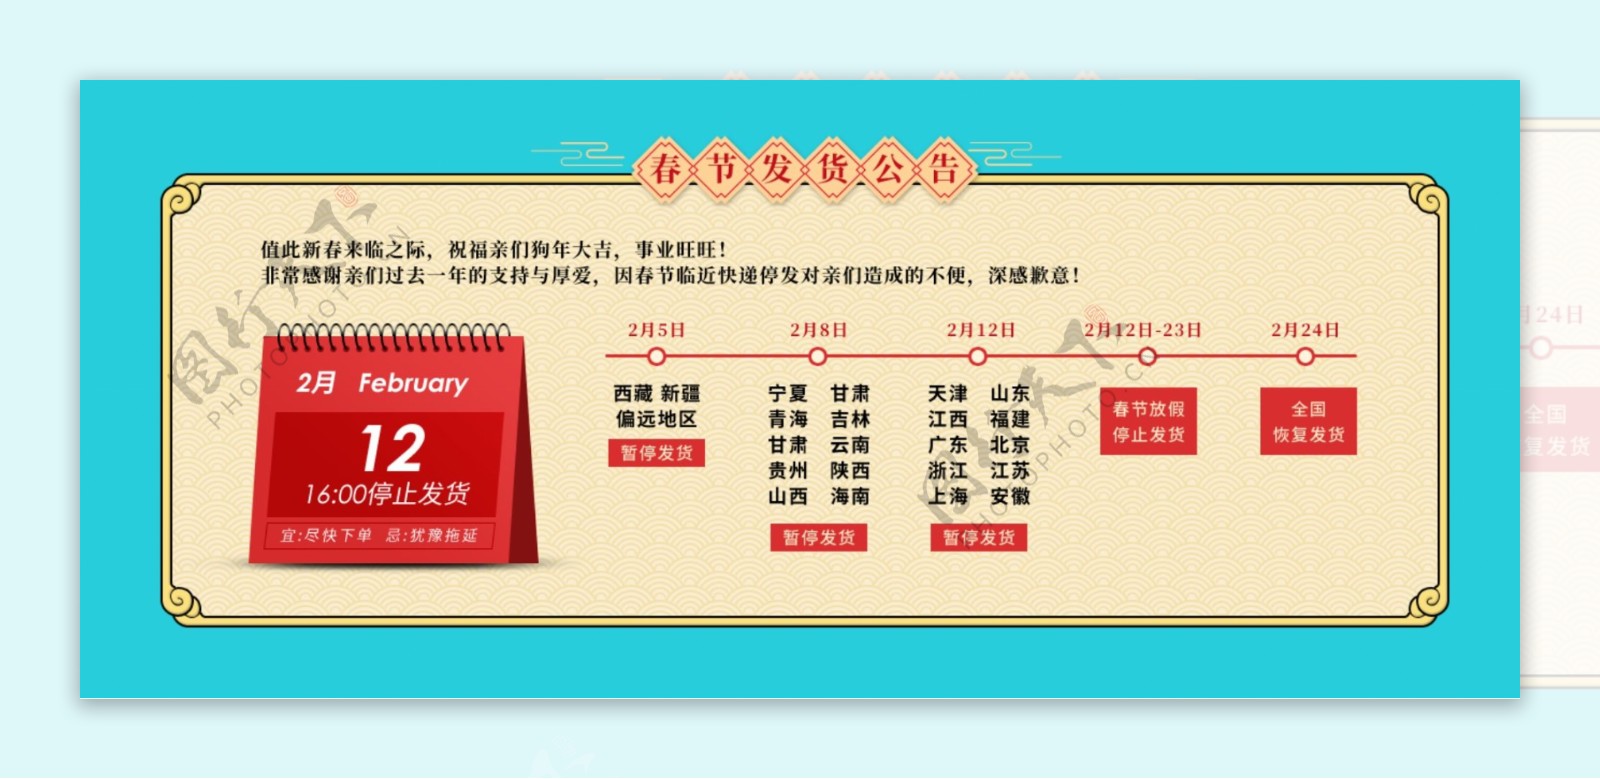 春节公告网页banner